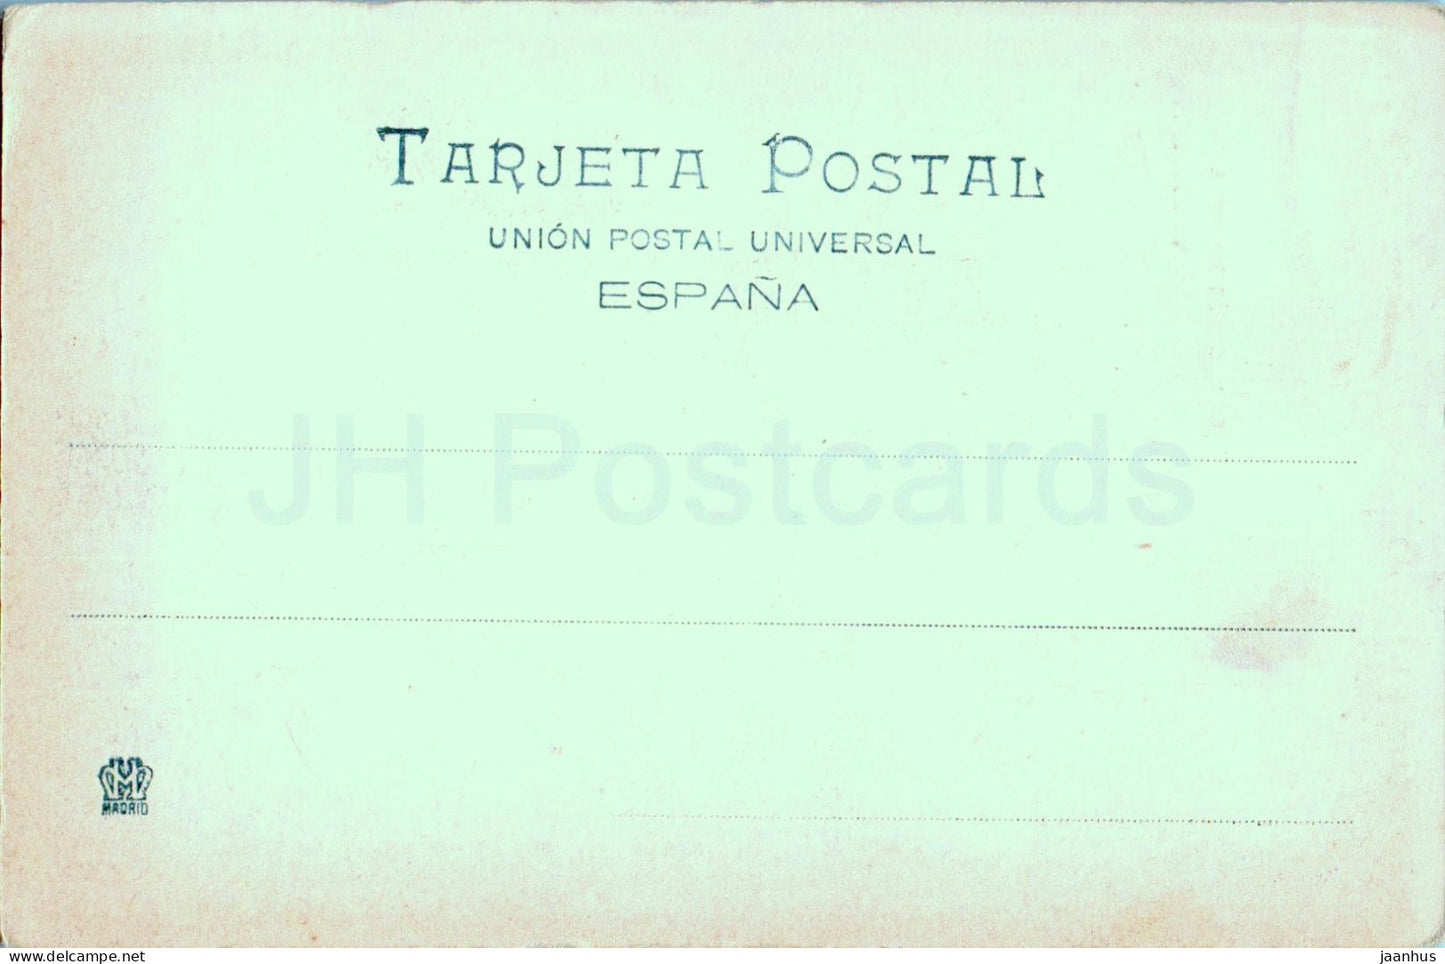 Alhambra - Sala de las Camas - old postcard - 1913 - Spain - unused